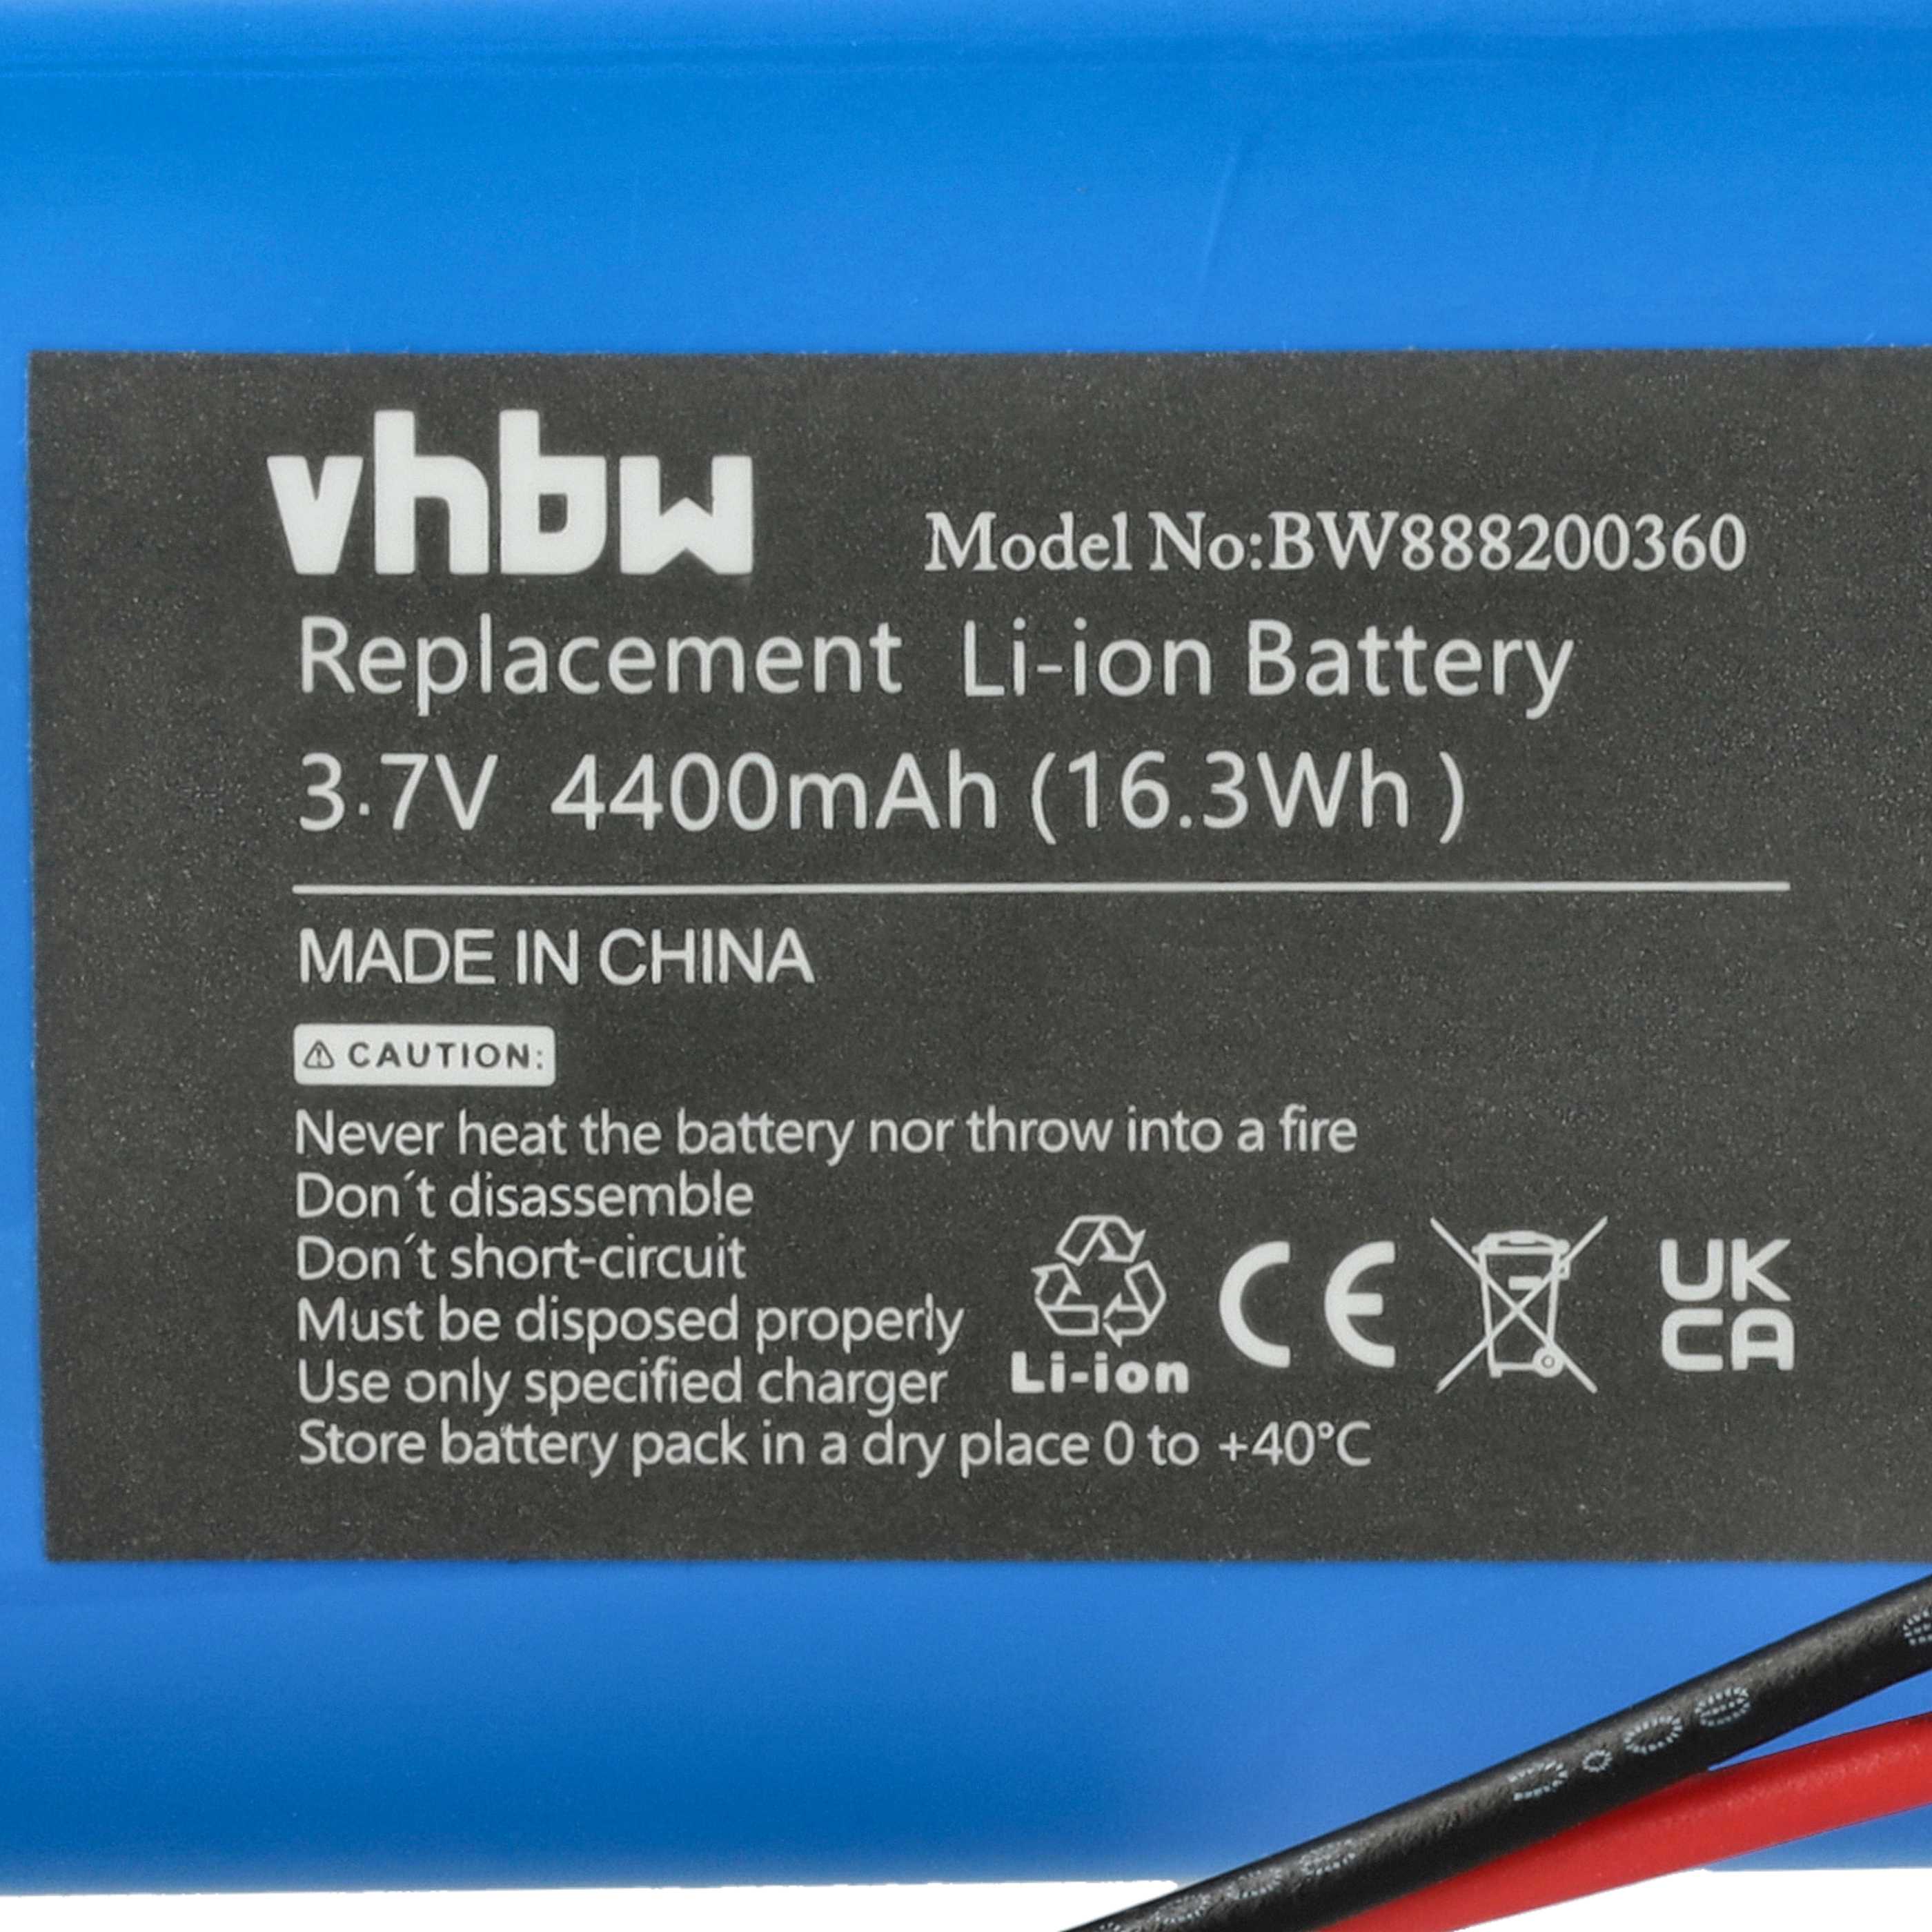 Desktop Lamp Battery (5 Units) Replacement for Sigor 4508401 - 4400mAh 3.7V Li-Ion